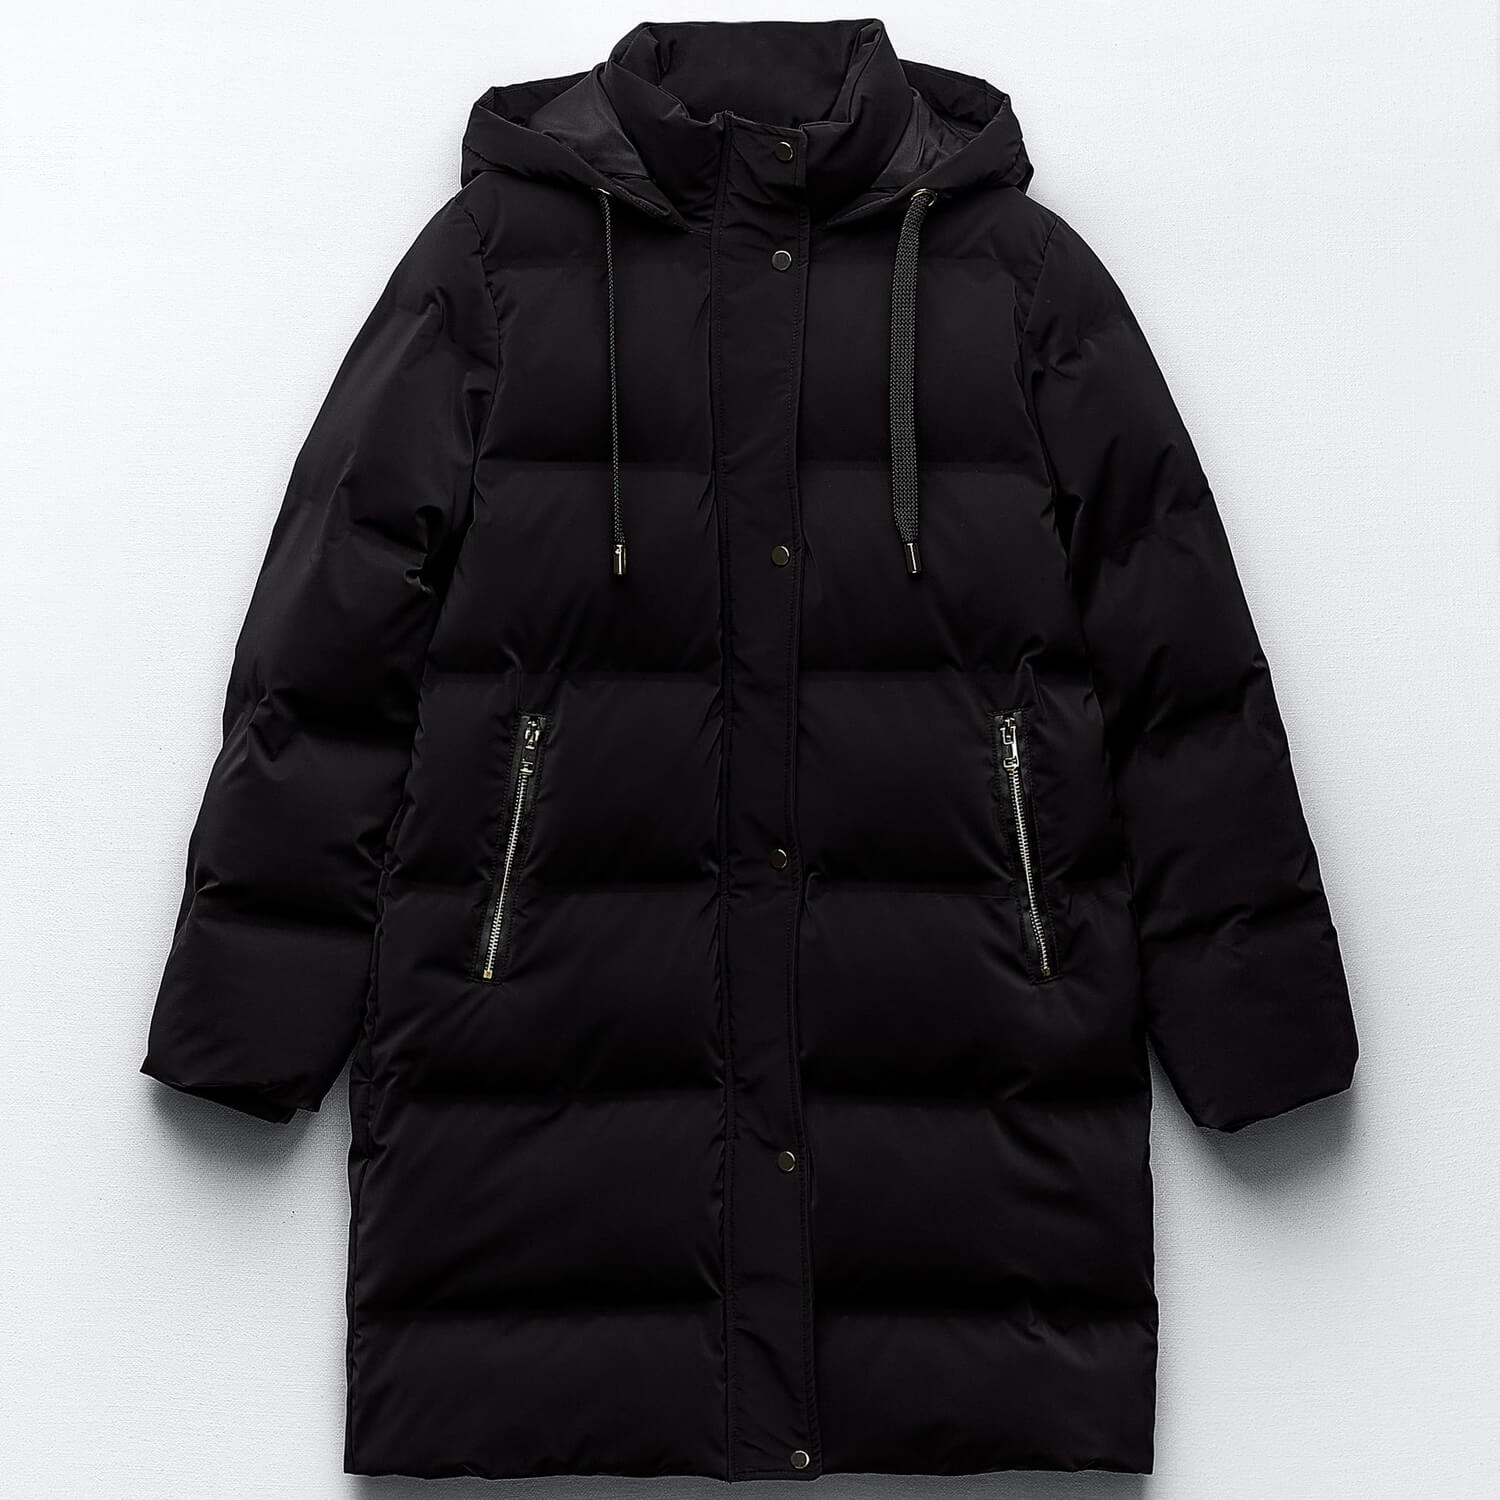 Куртка-анорак Zara Hooded With Wind Protection, черный толстовка nsd style оверсайз средней длины карманы капюшон карманы размер 44 черный